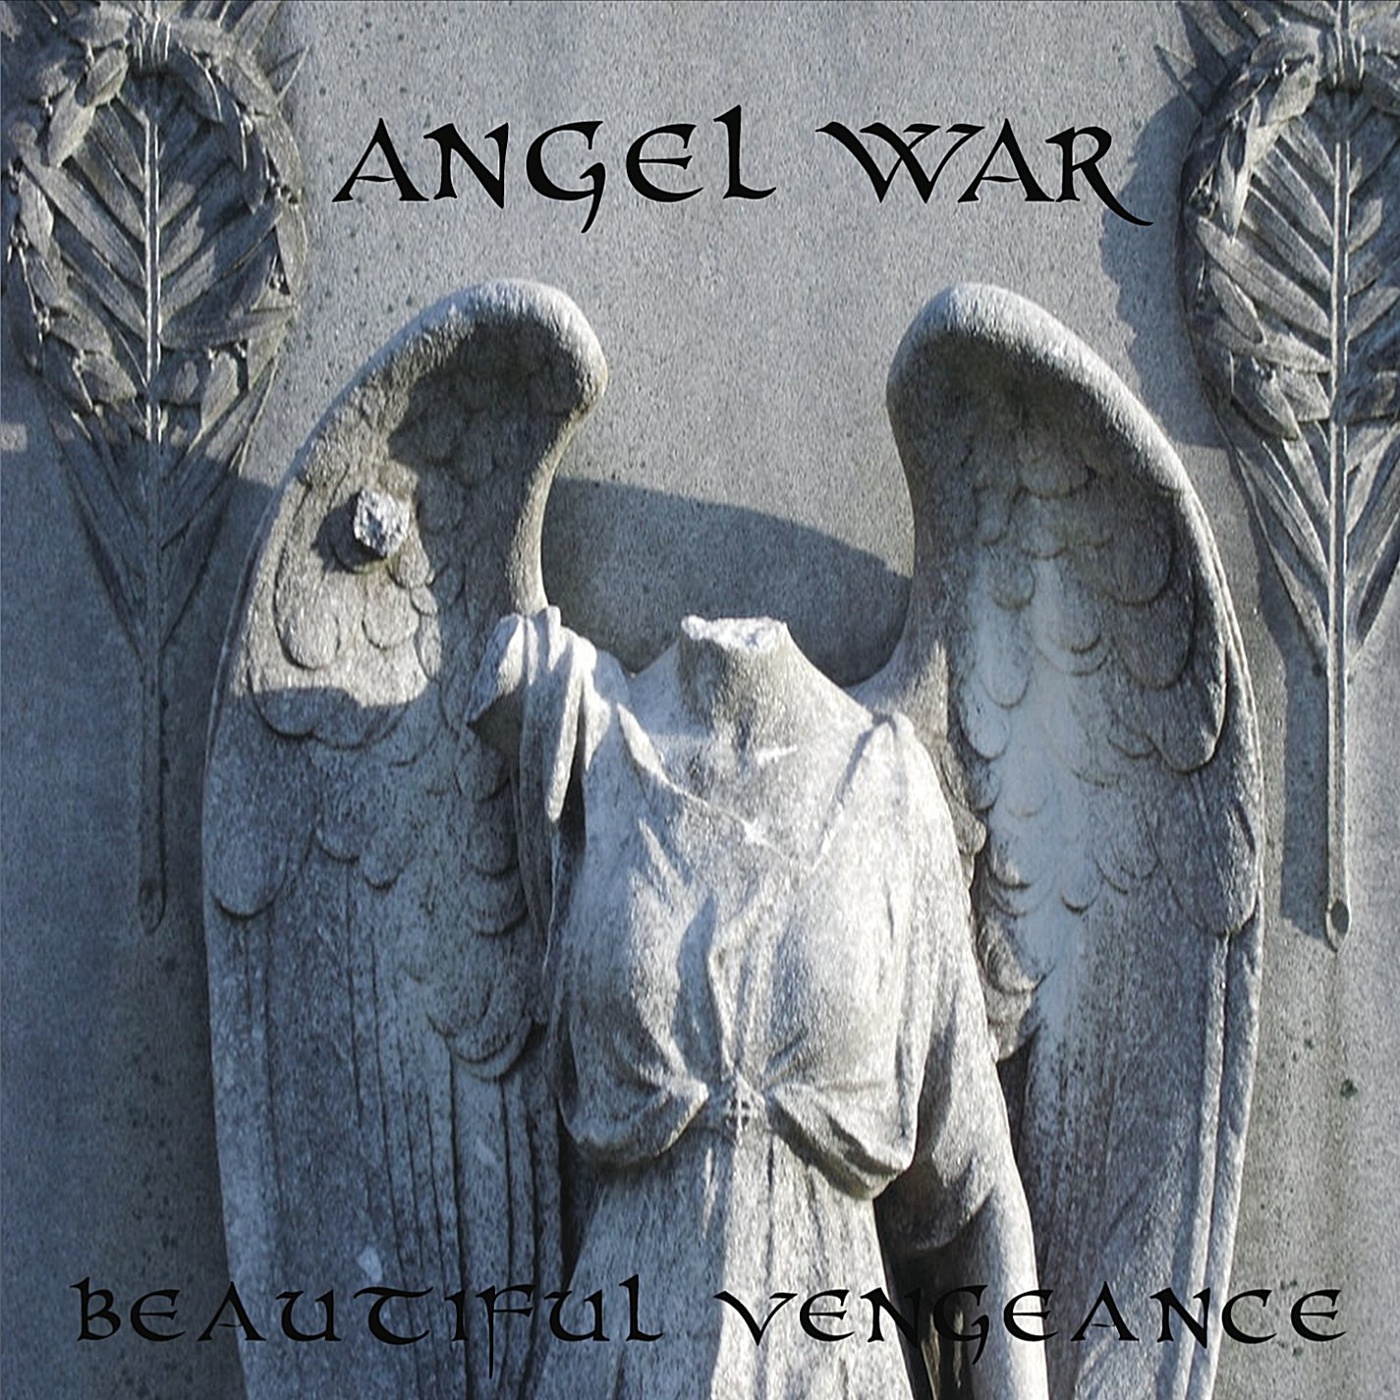 Песня ангелы войны. Баракиэль ангел. Победа ангела. Баракиэль ангел хранитель. Ангелы войны.